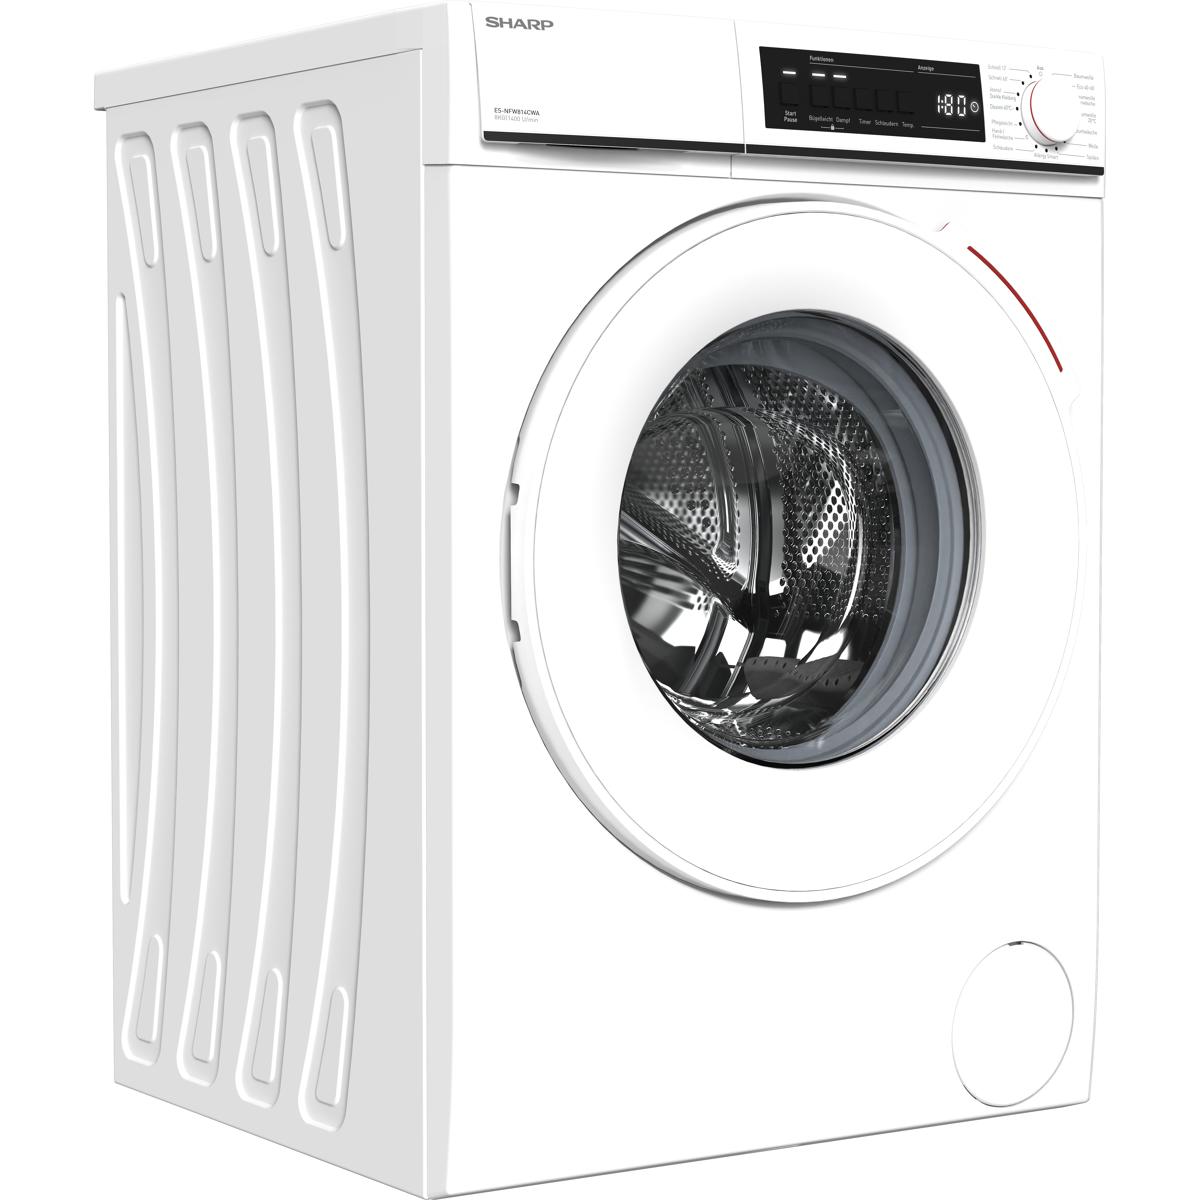 Sharp ES-NFW814CWA-DE Waschmaschine, AquaStop, U/Min, EcoLogic, Wagner Elektroshop AllergySmart, weiß 1400 DoubleJet